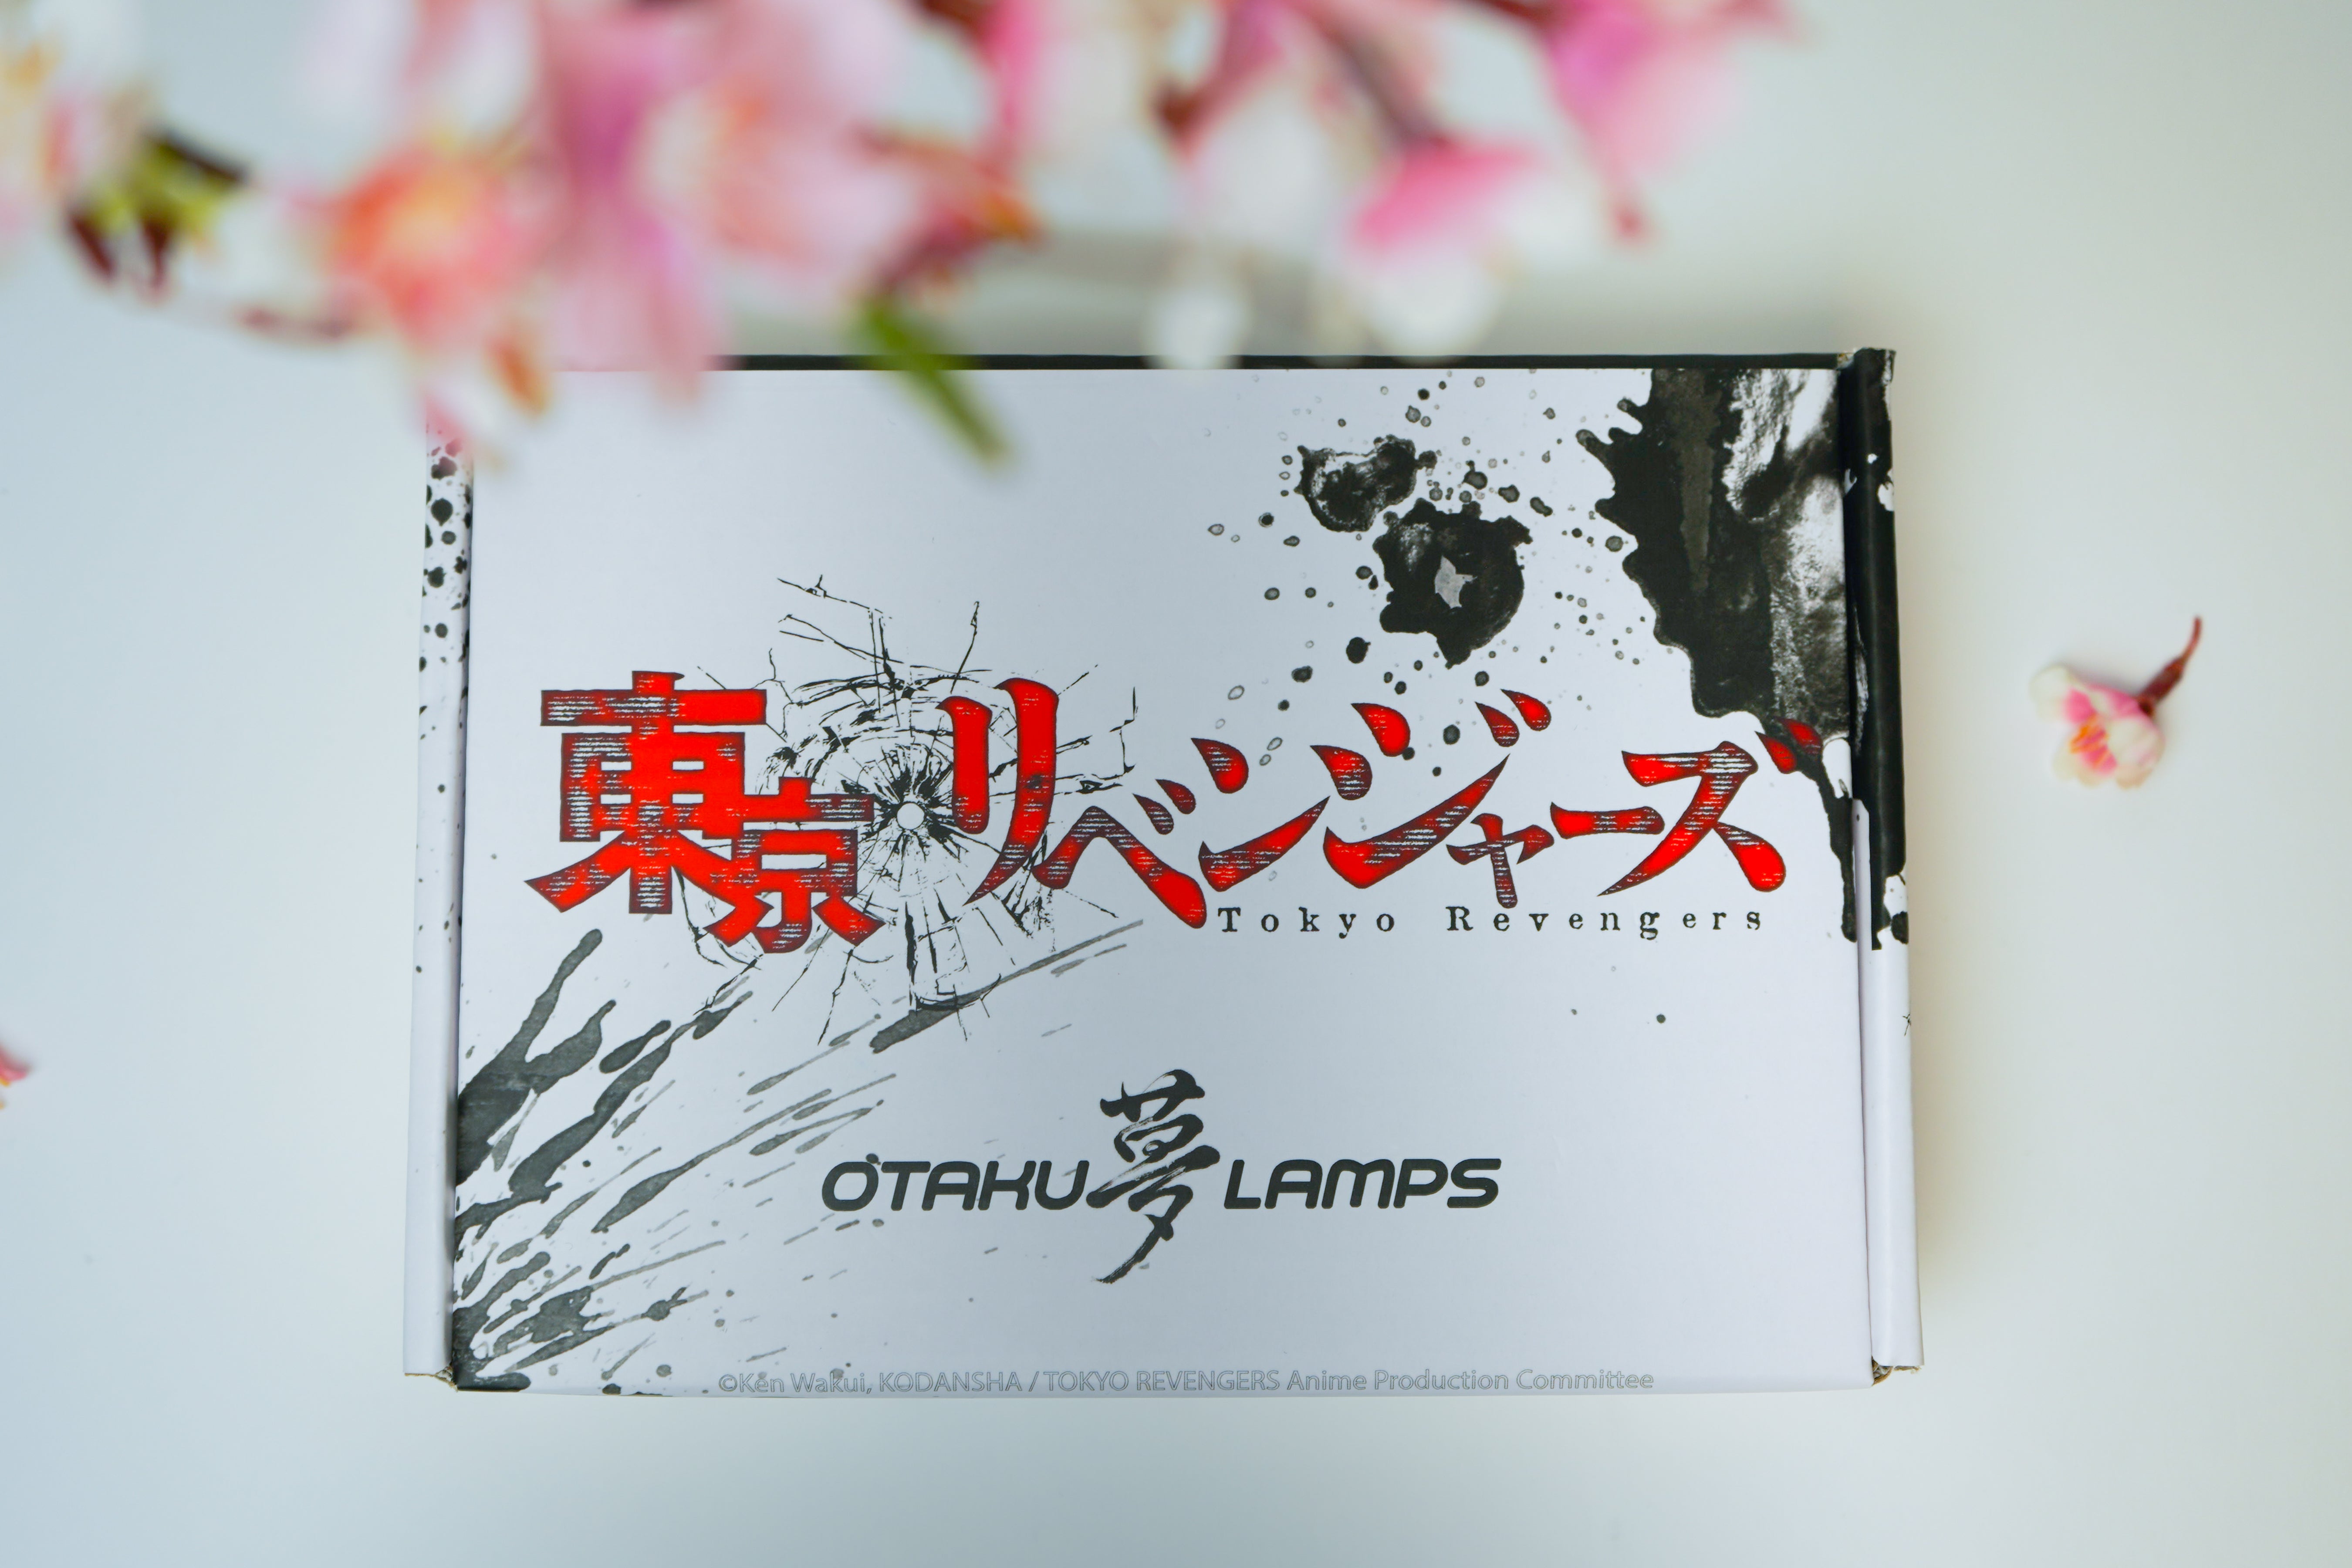 Draken Tokyo Manji Otaku Lamp (Tokyo Revengers)